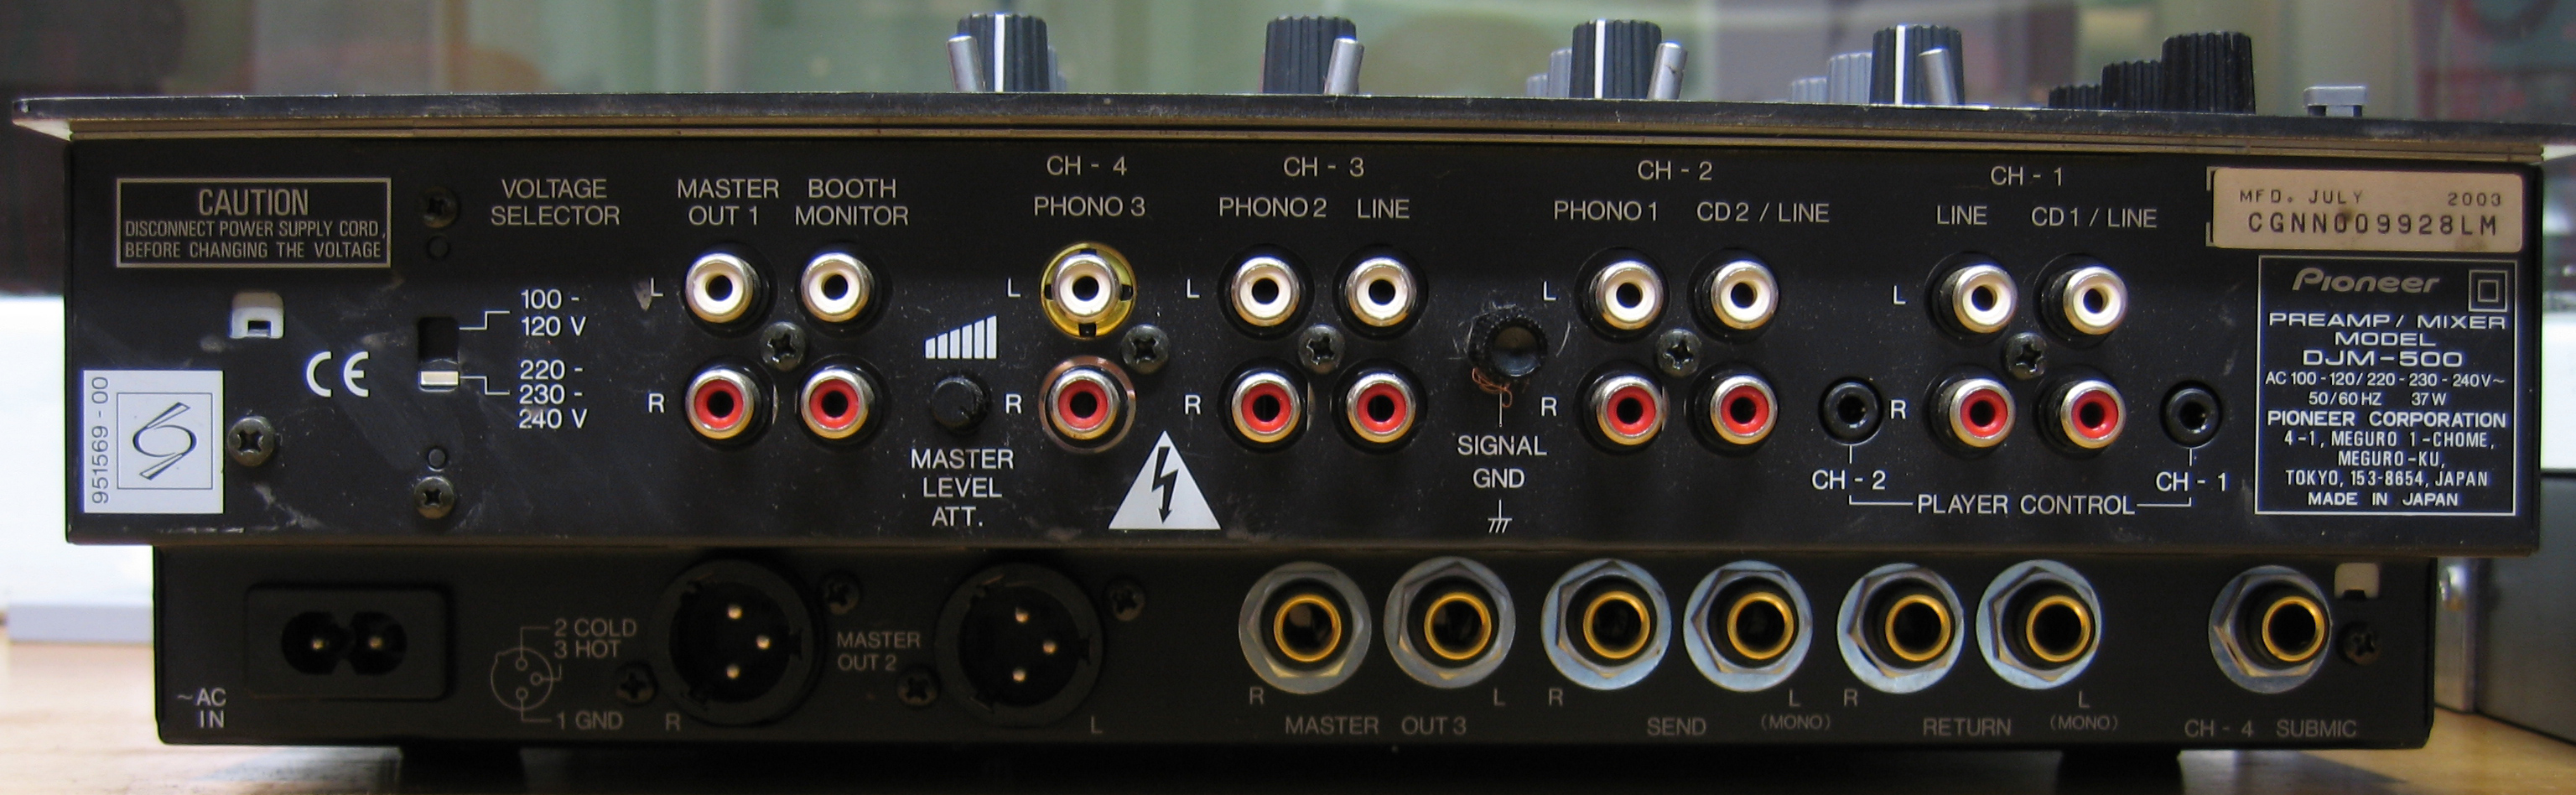 Is this $47 audio mixer worth it? - Audio - Linus Tech Tips